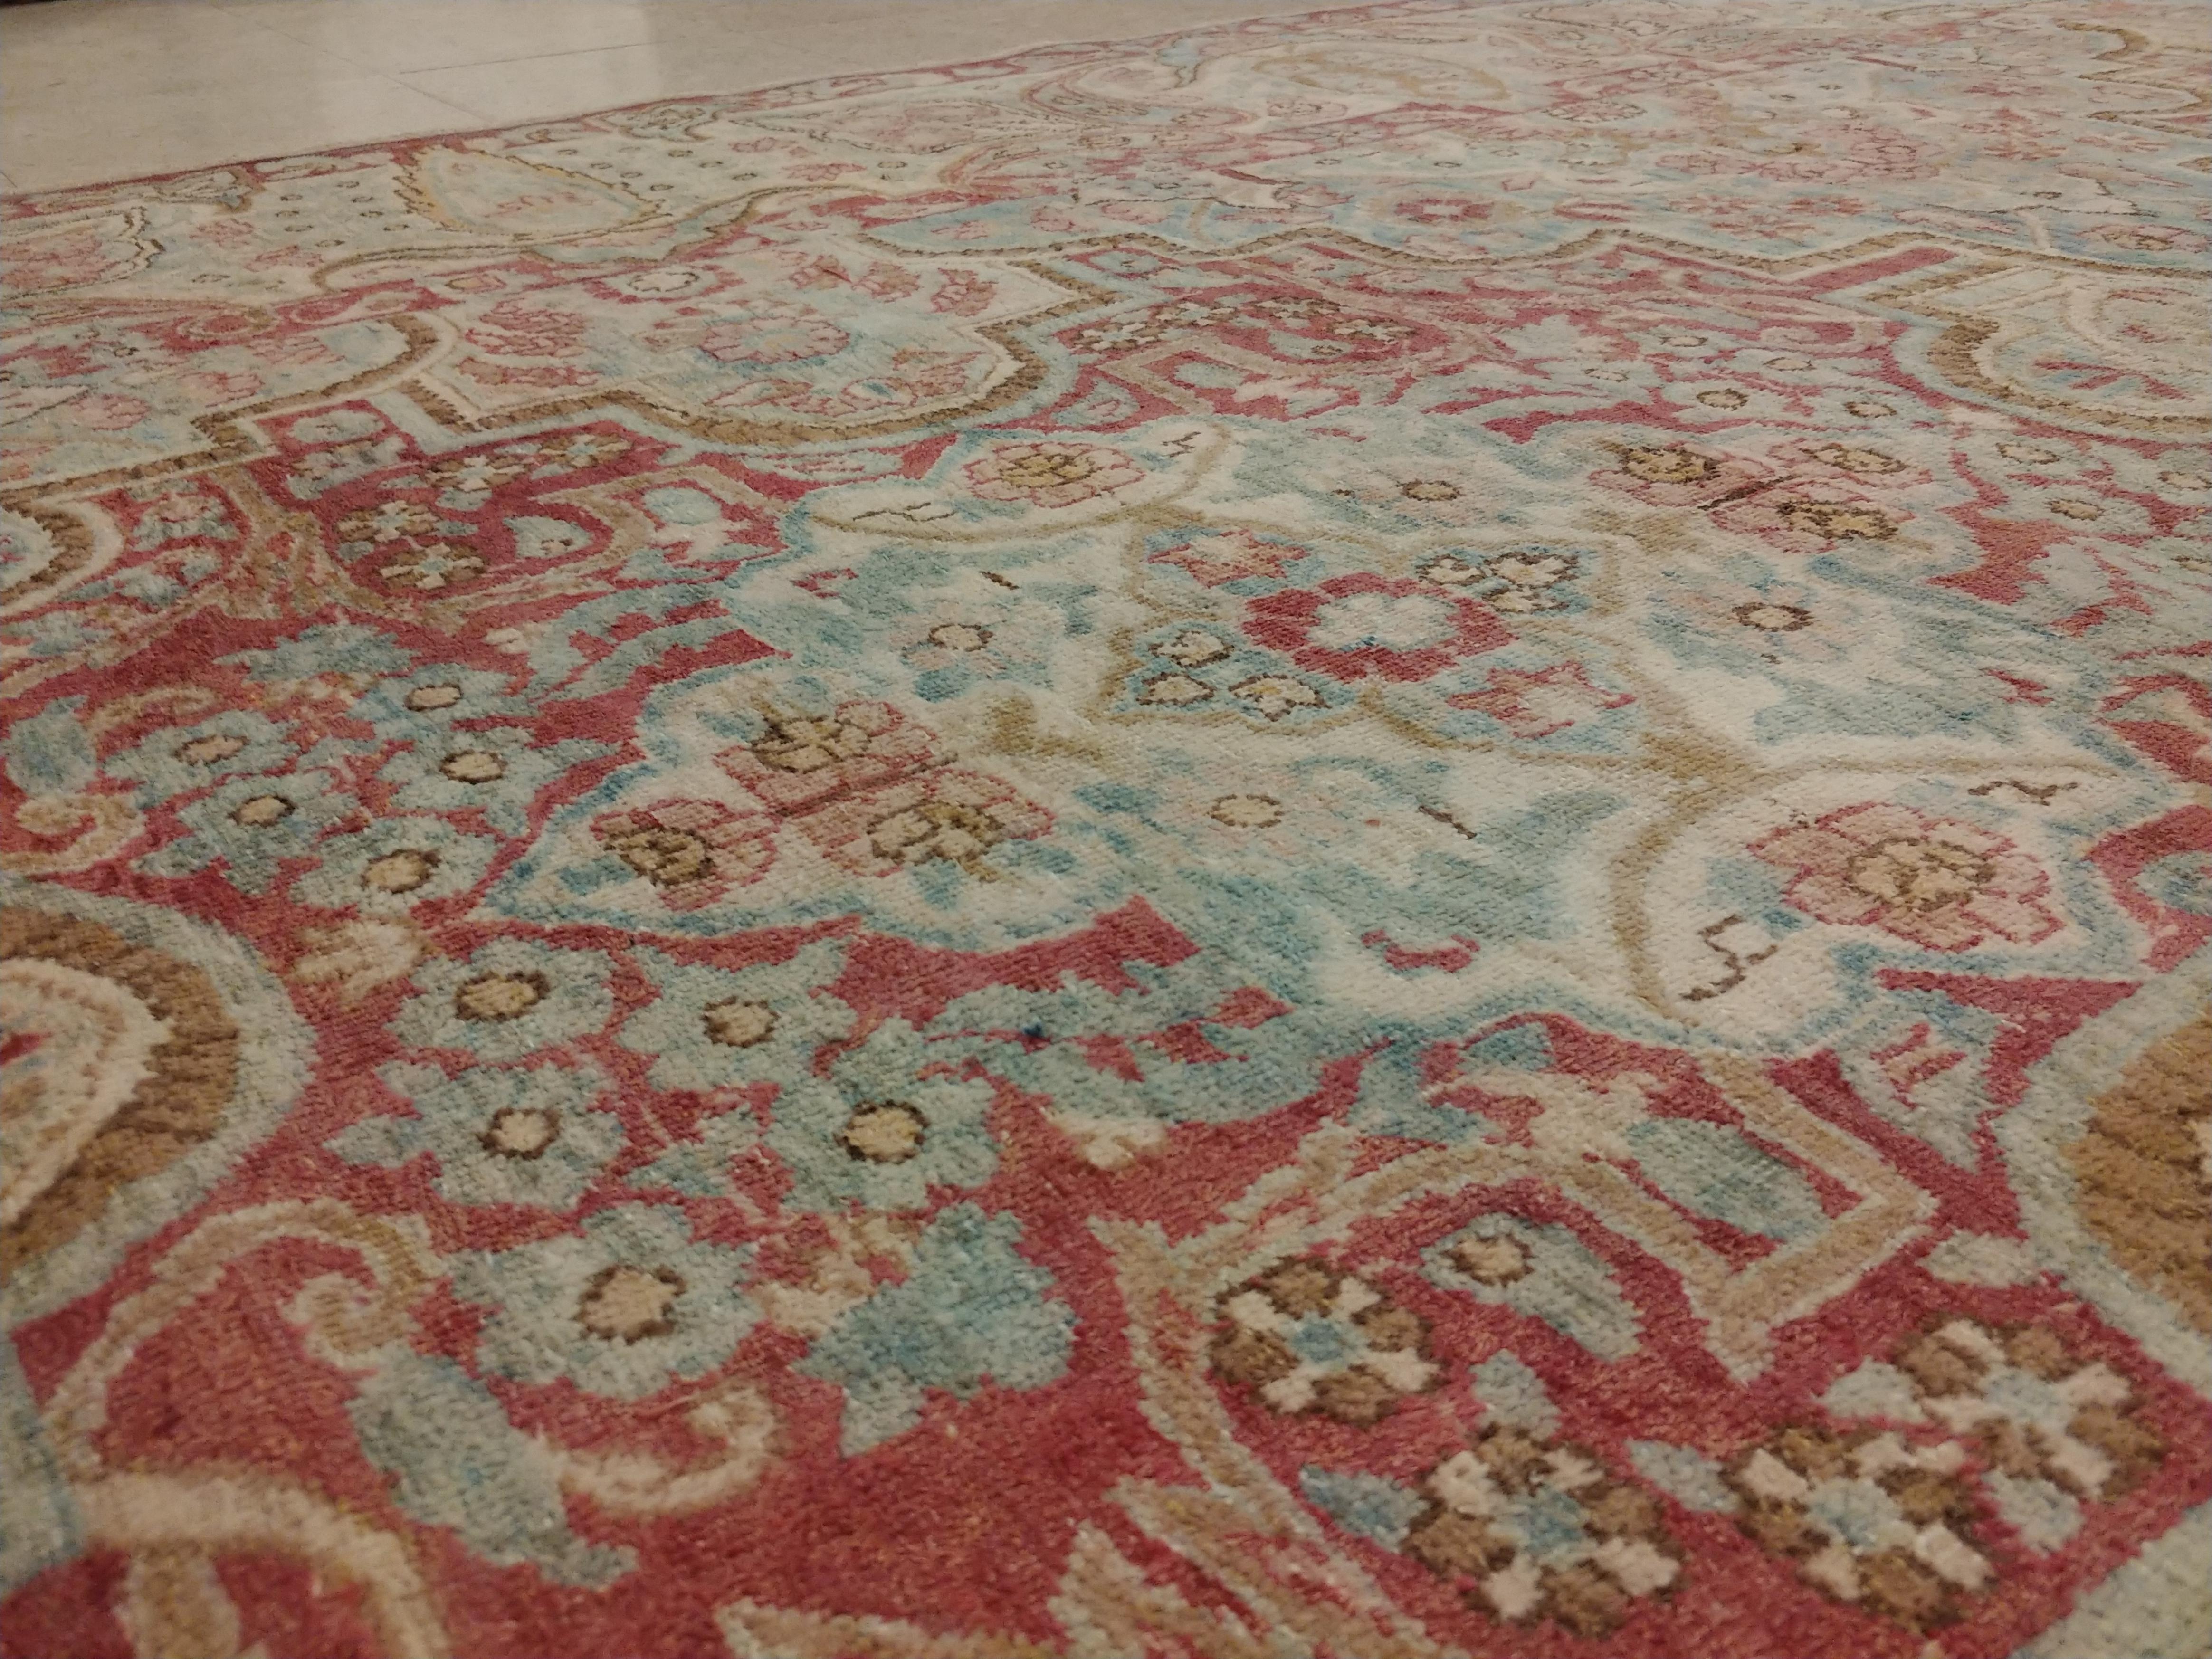 Kirman Antique Kerman Carpet, Handmade Persian Rug Wool Carpet Lt Blue, Beige and Coral For Sale